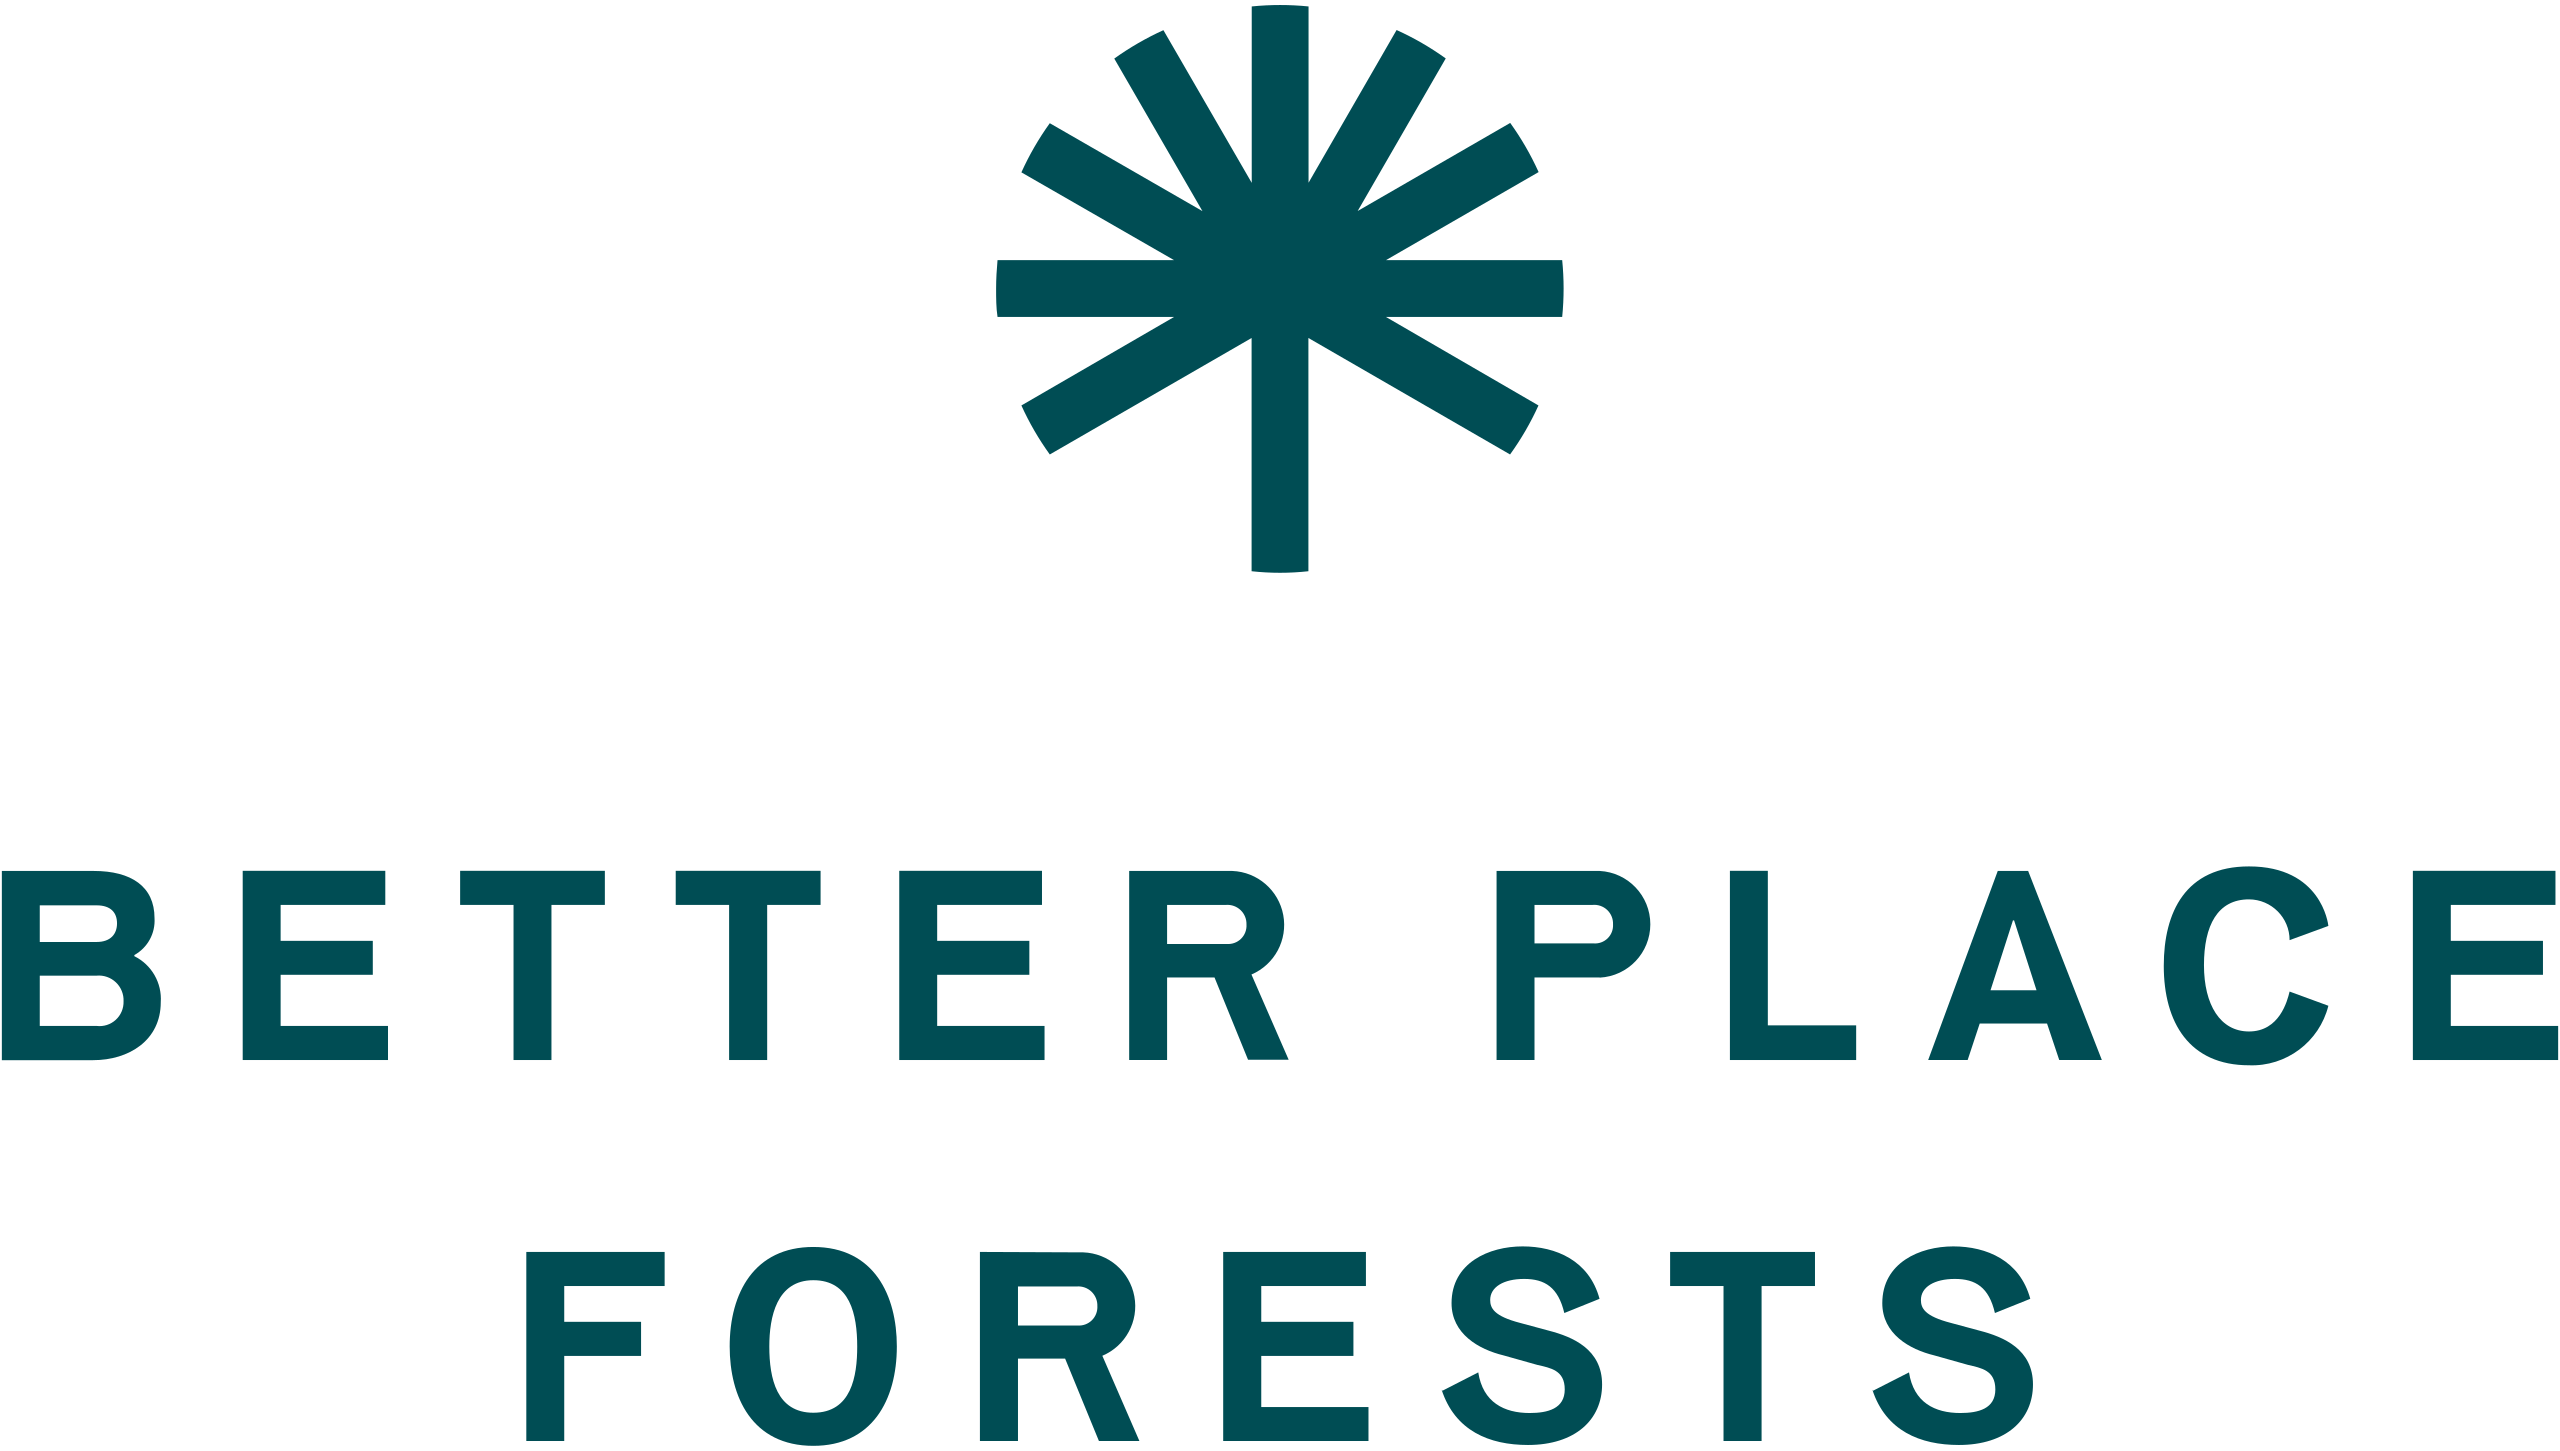 Better place. Better логотип. Better place Forests. Forest goods logo. Статья про better place Forests.